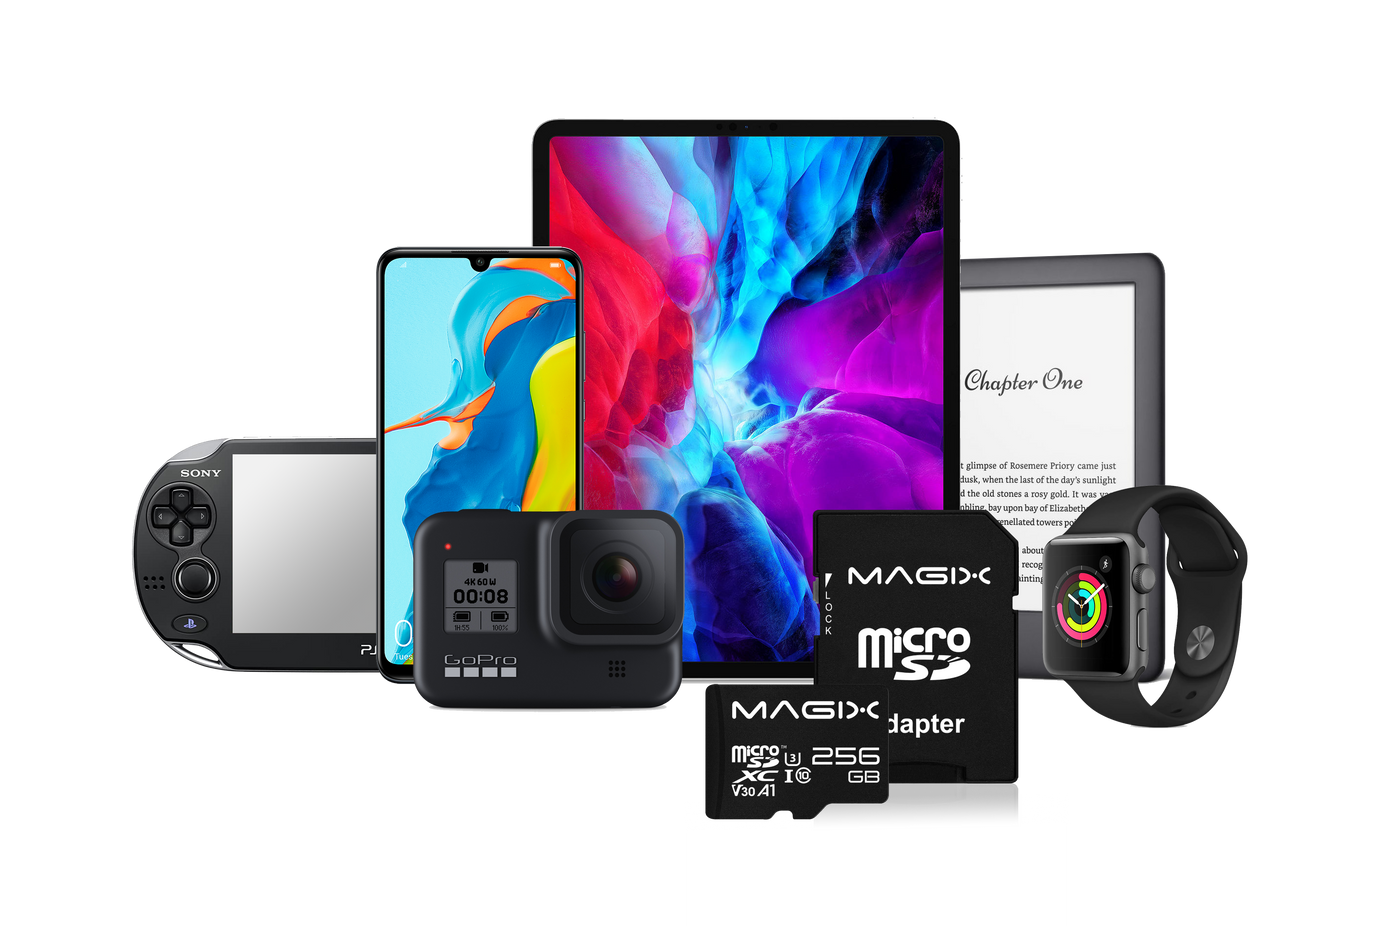 MAGIX MicroSD Card 4K Series + SD Adapter Class10 V30